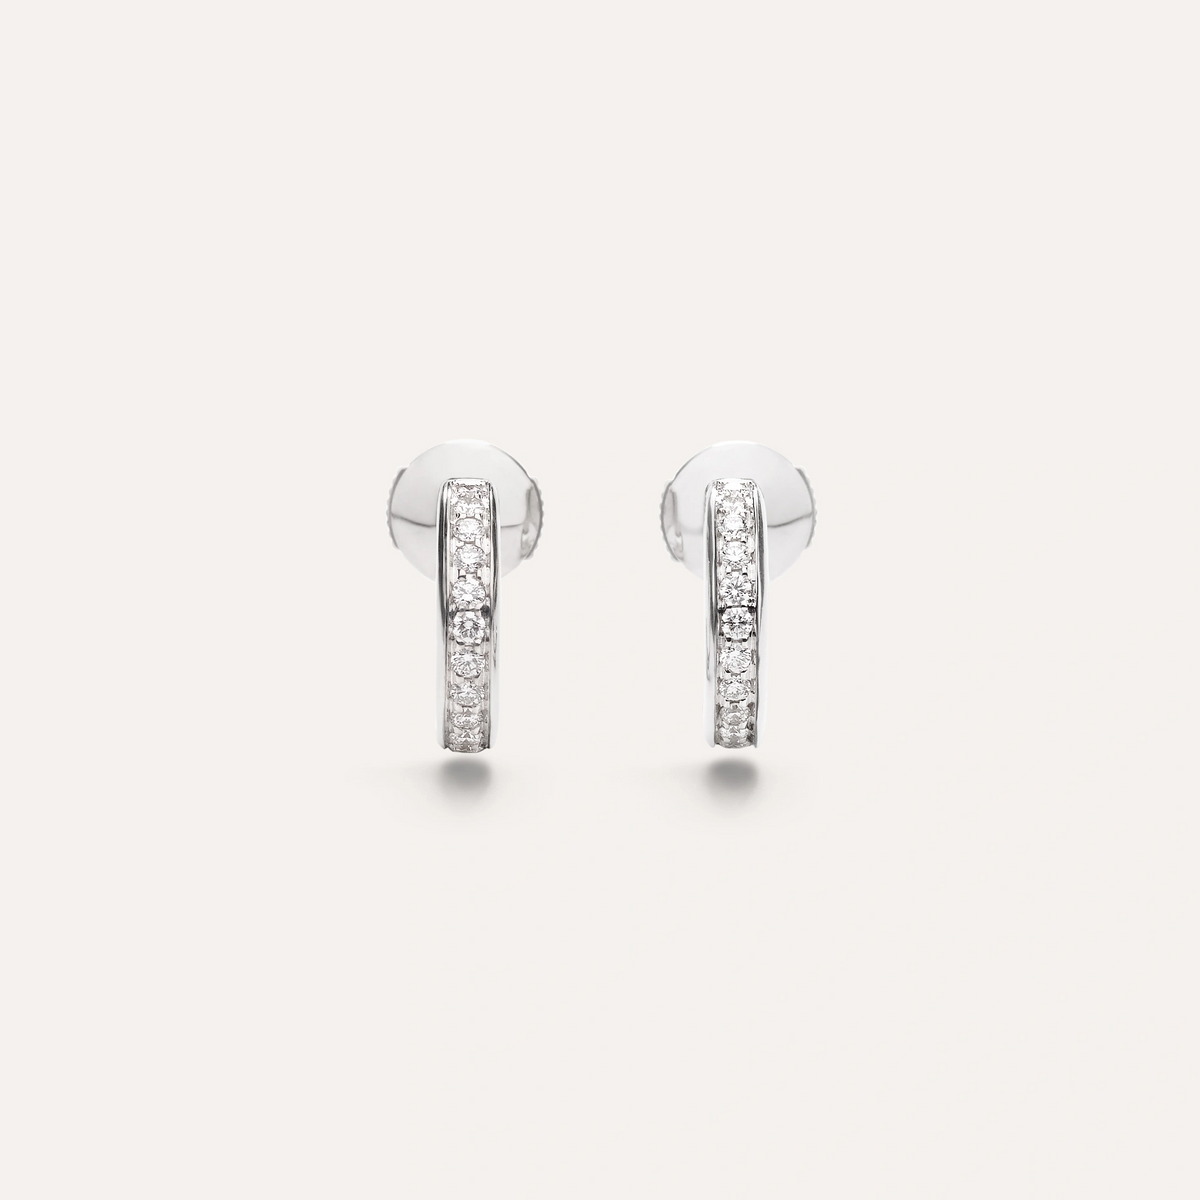 Pomellato Together Diamond Earrings in 18k White Gold with Diamonds - Orsini Jewellers